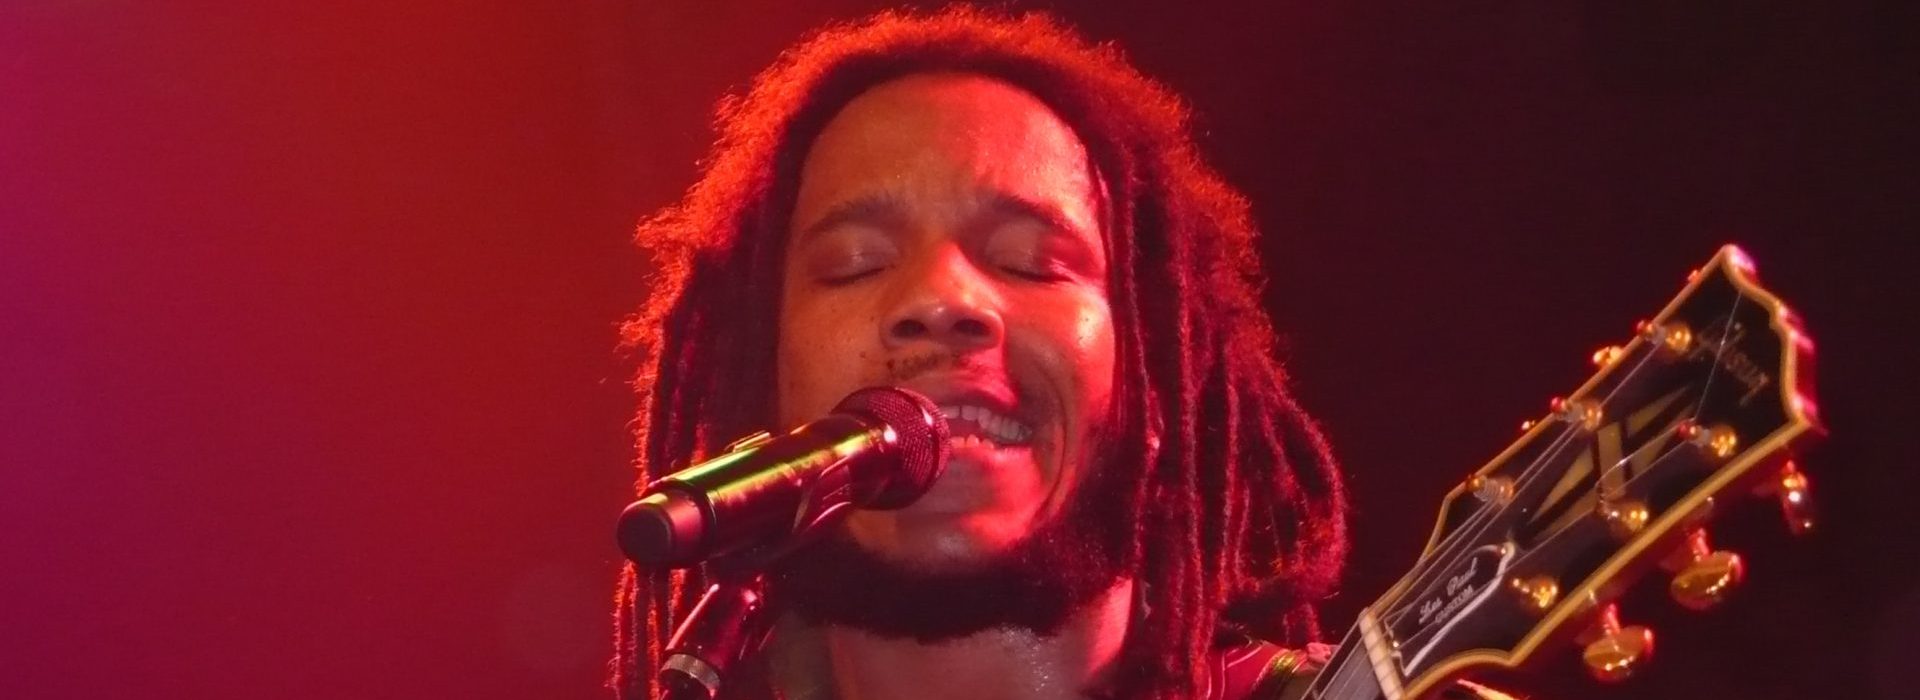 Reggae artist, Stephen Marley